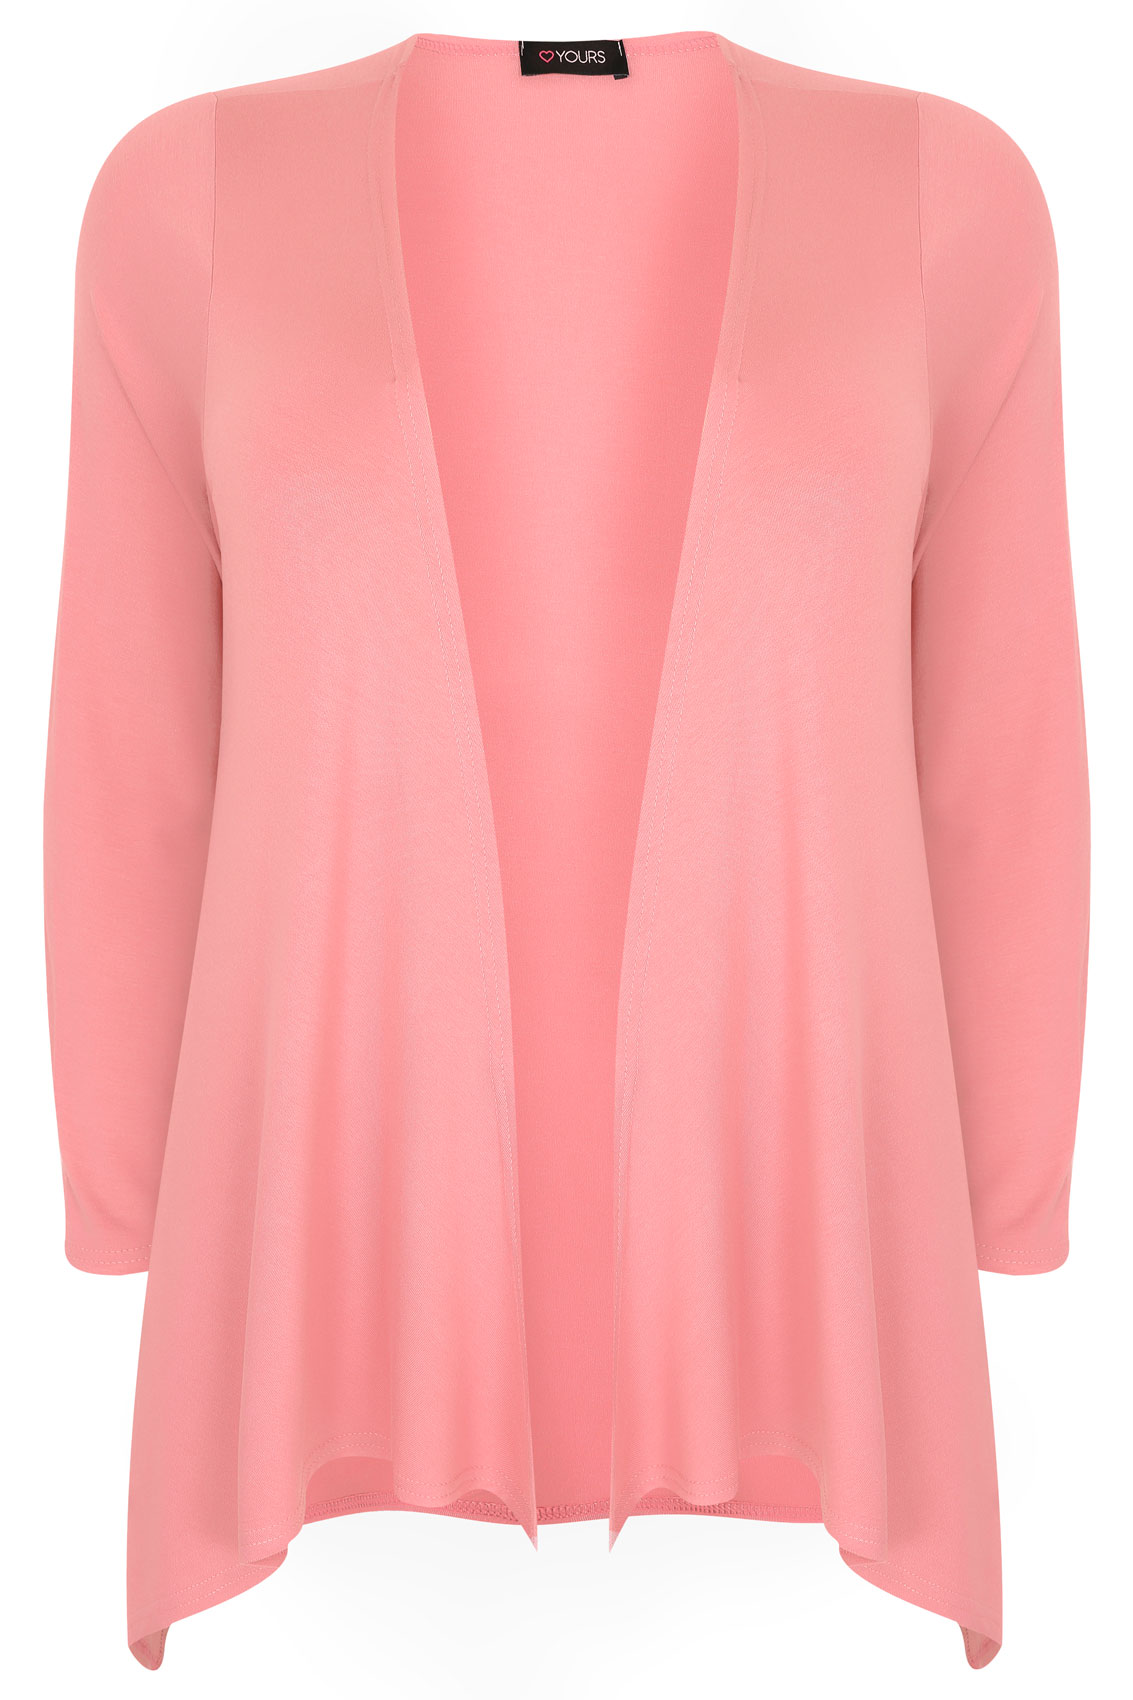 Blush Pink Edge To Edge Waterfall Jersey Cardigan, Plus size 16 to 36